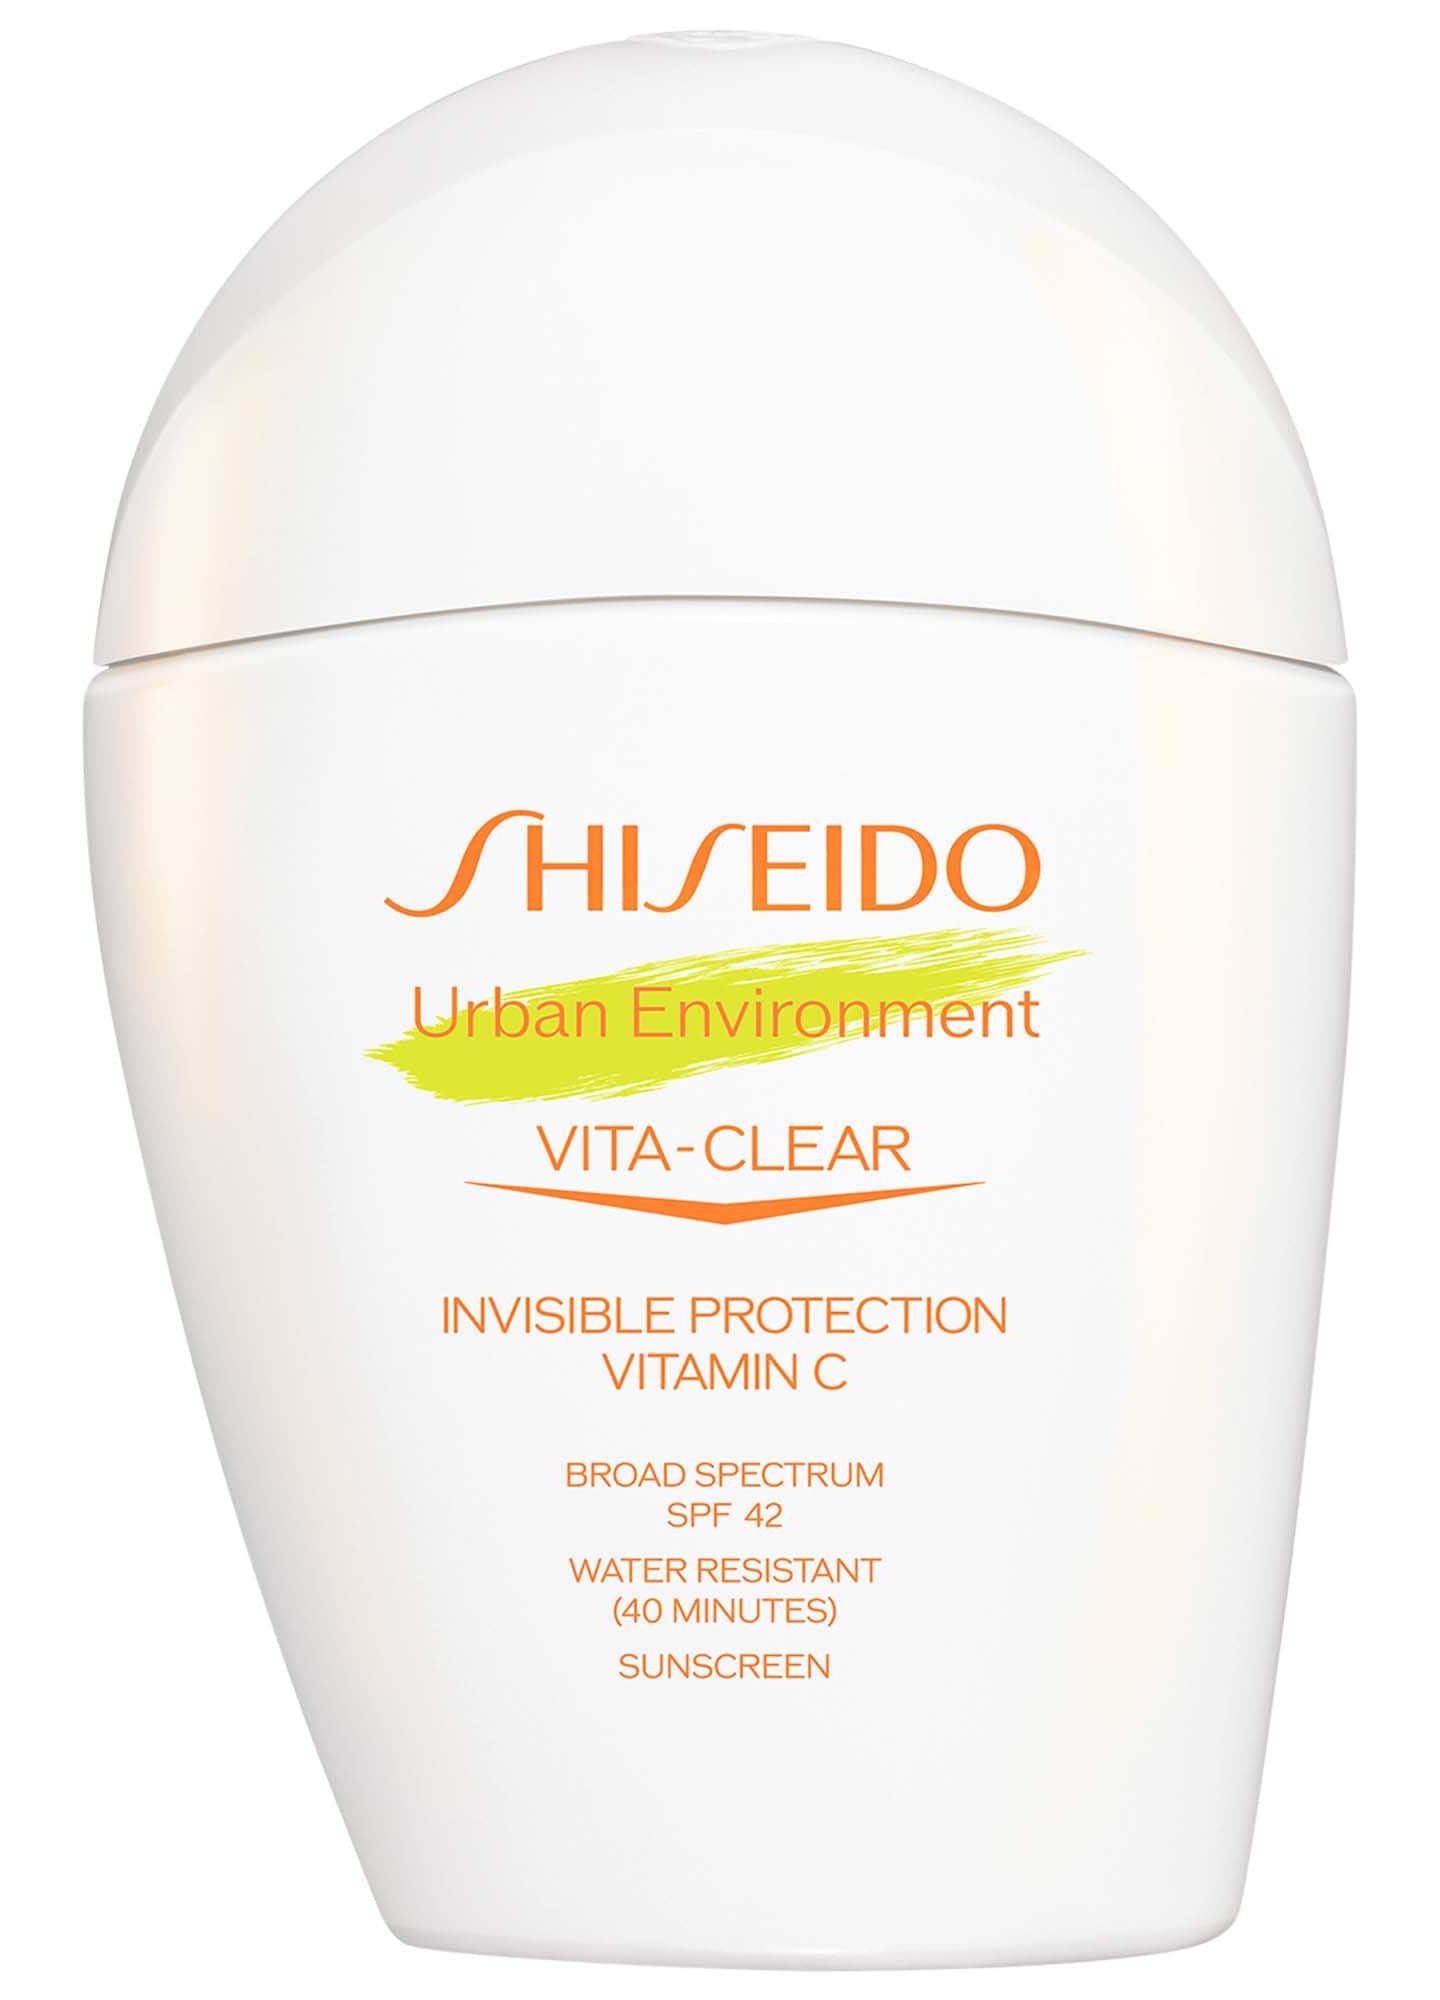 Shiseido Urban Environment Vita-clear Sunscreen SPF 42